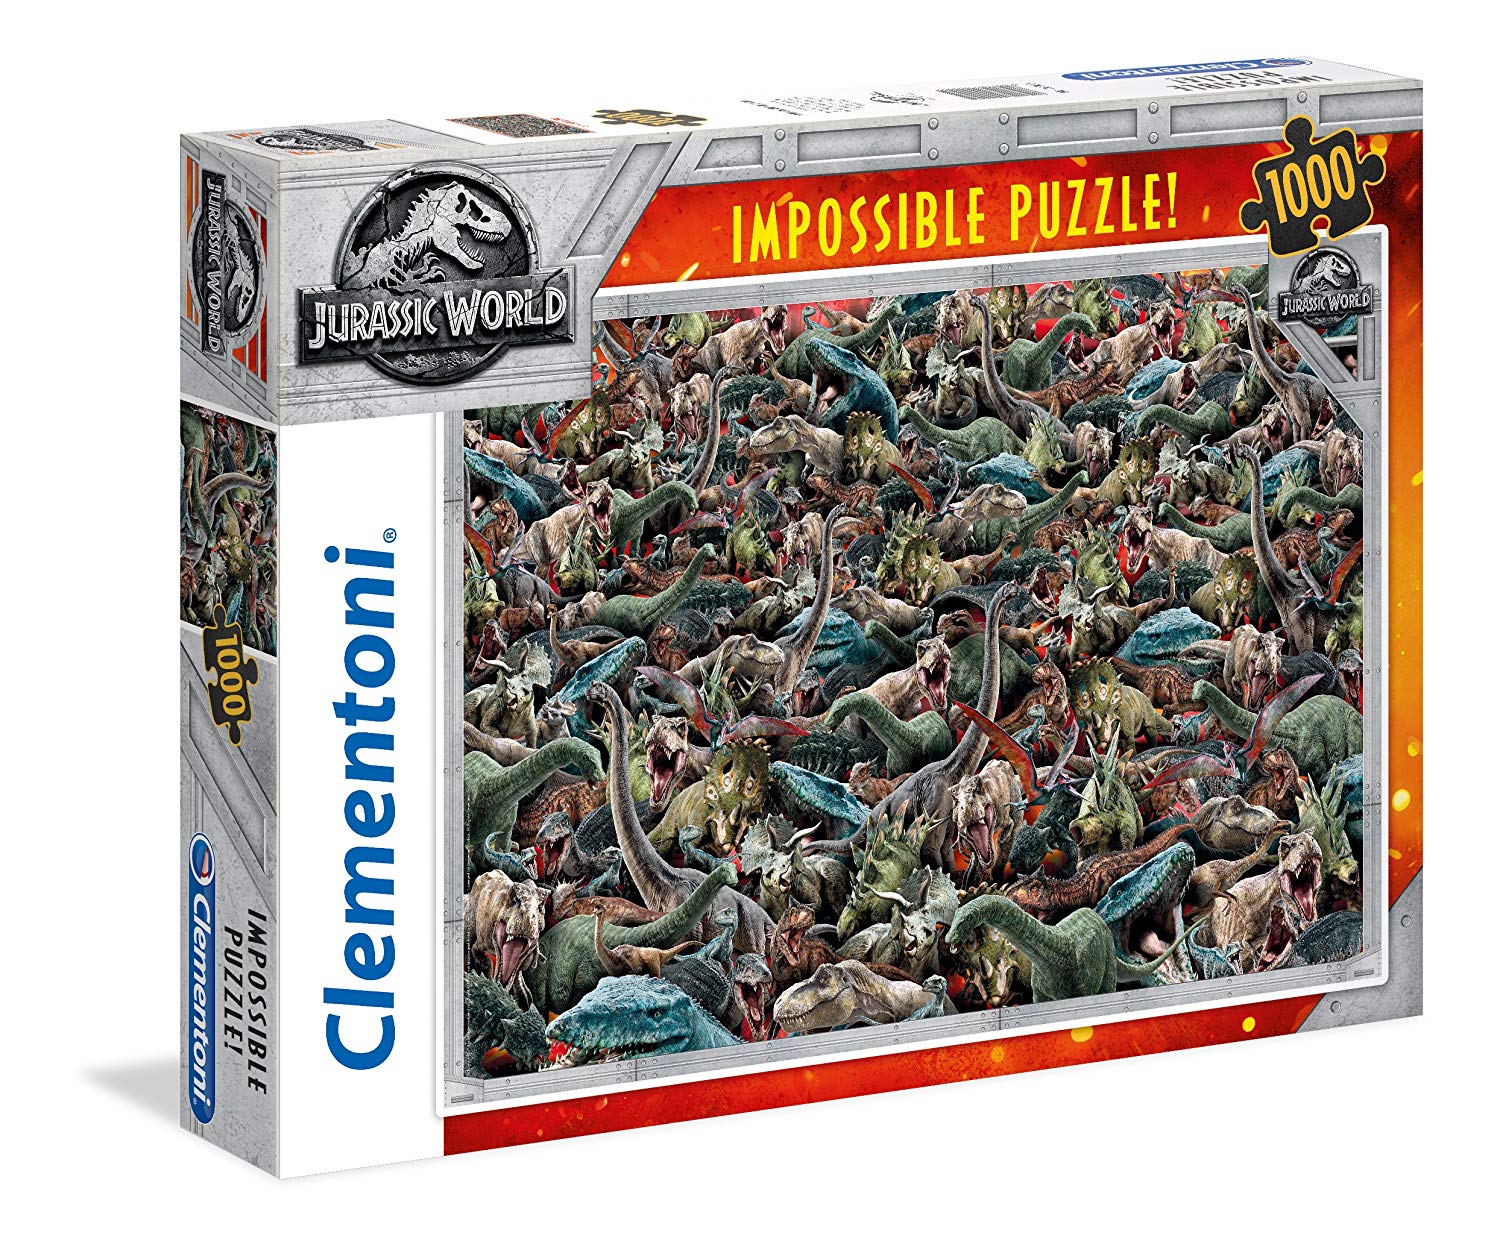 Clementoni Jurassic Park/World Clementoni-39470-Impossible Puzzle World-1000 Pieces, Multi-Colour – TopToy